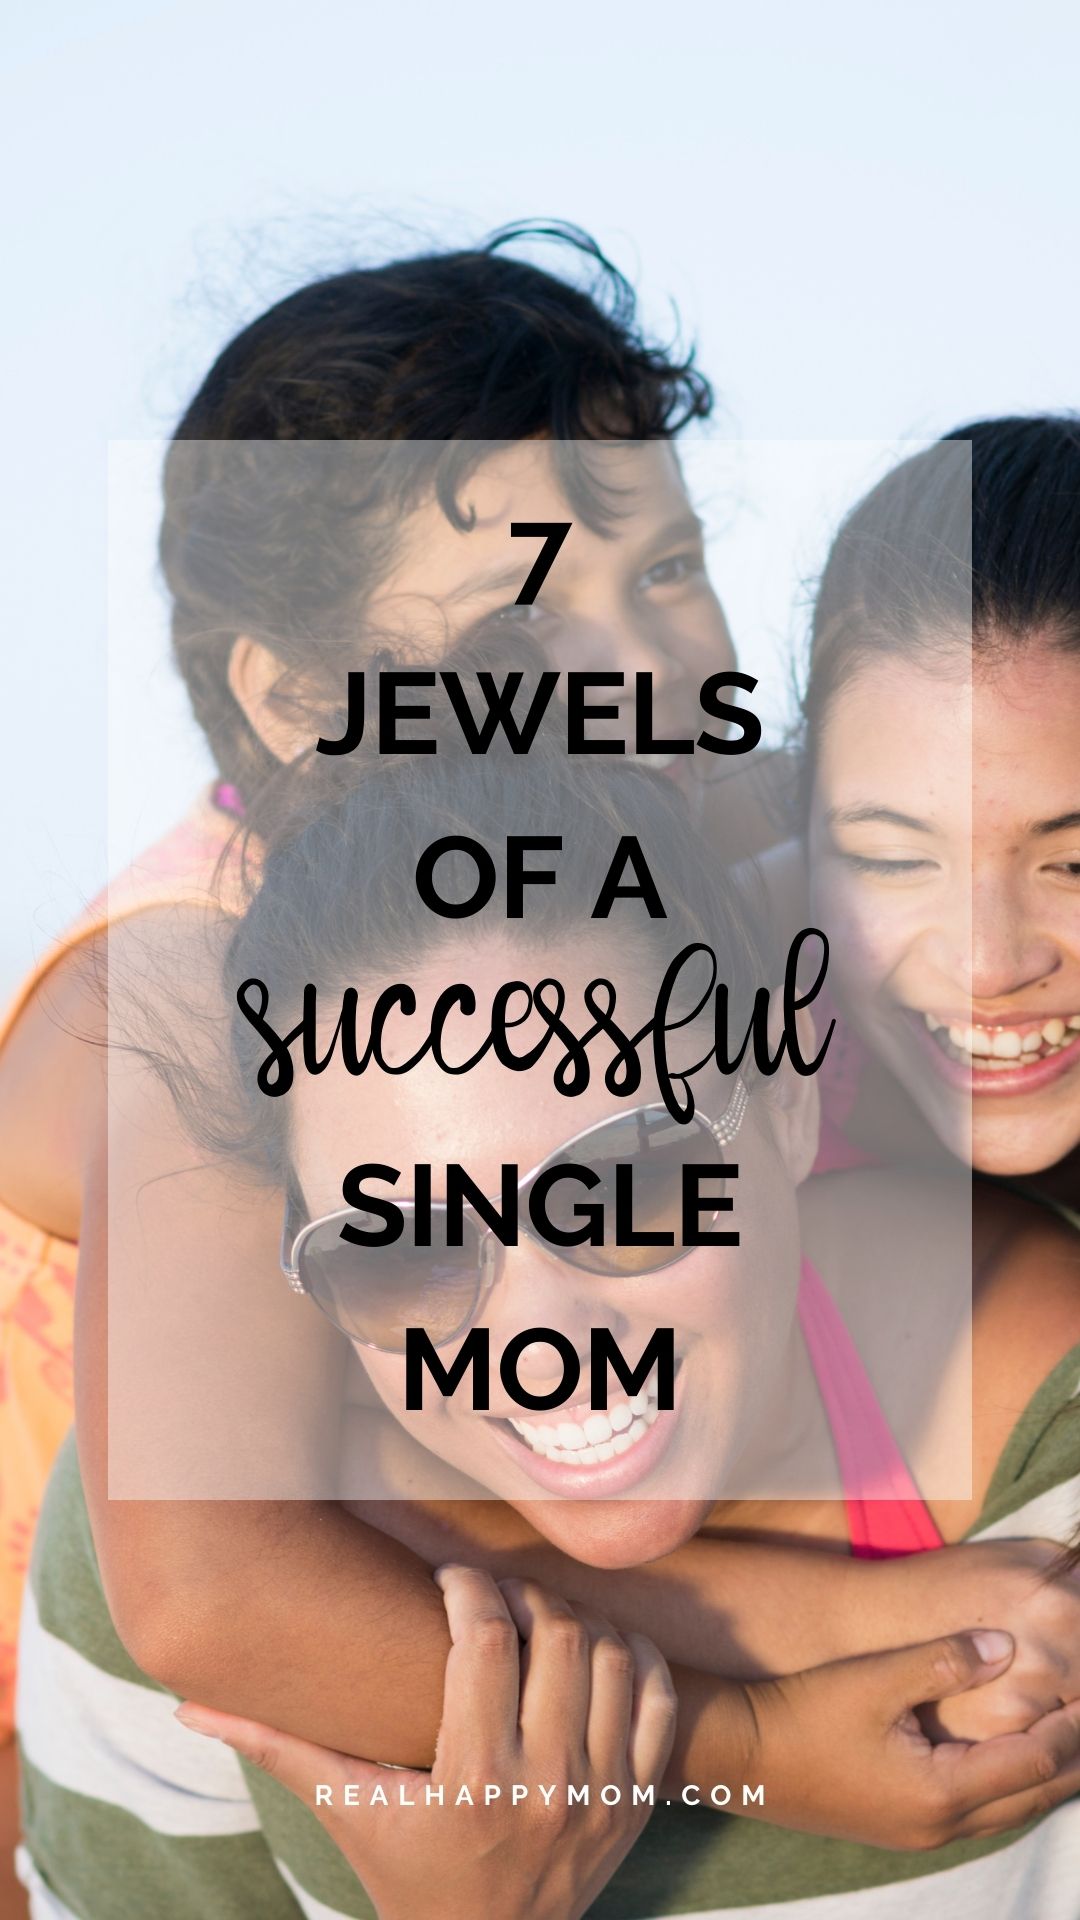 7 Jewels of A Successful Single Mom